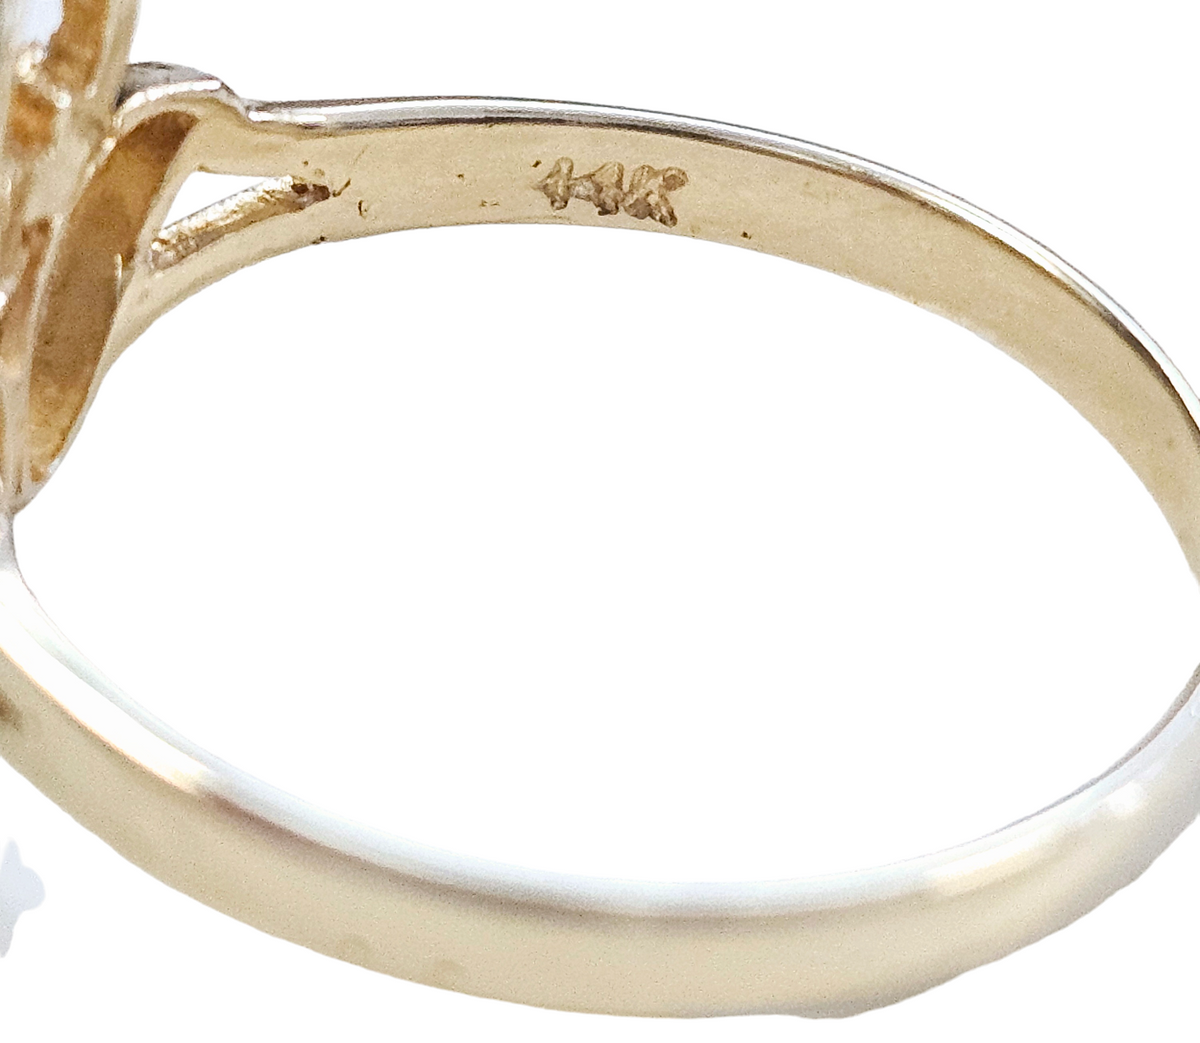 #15 Leaf Drop Design Ring made in 14-Karat Yellow and Rose Gold